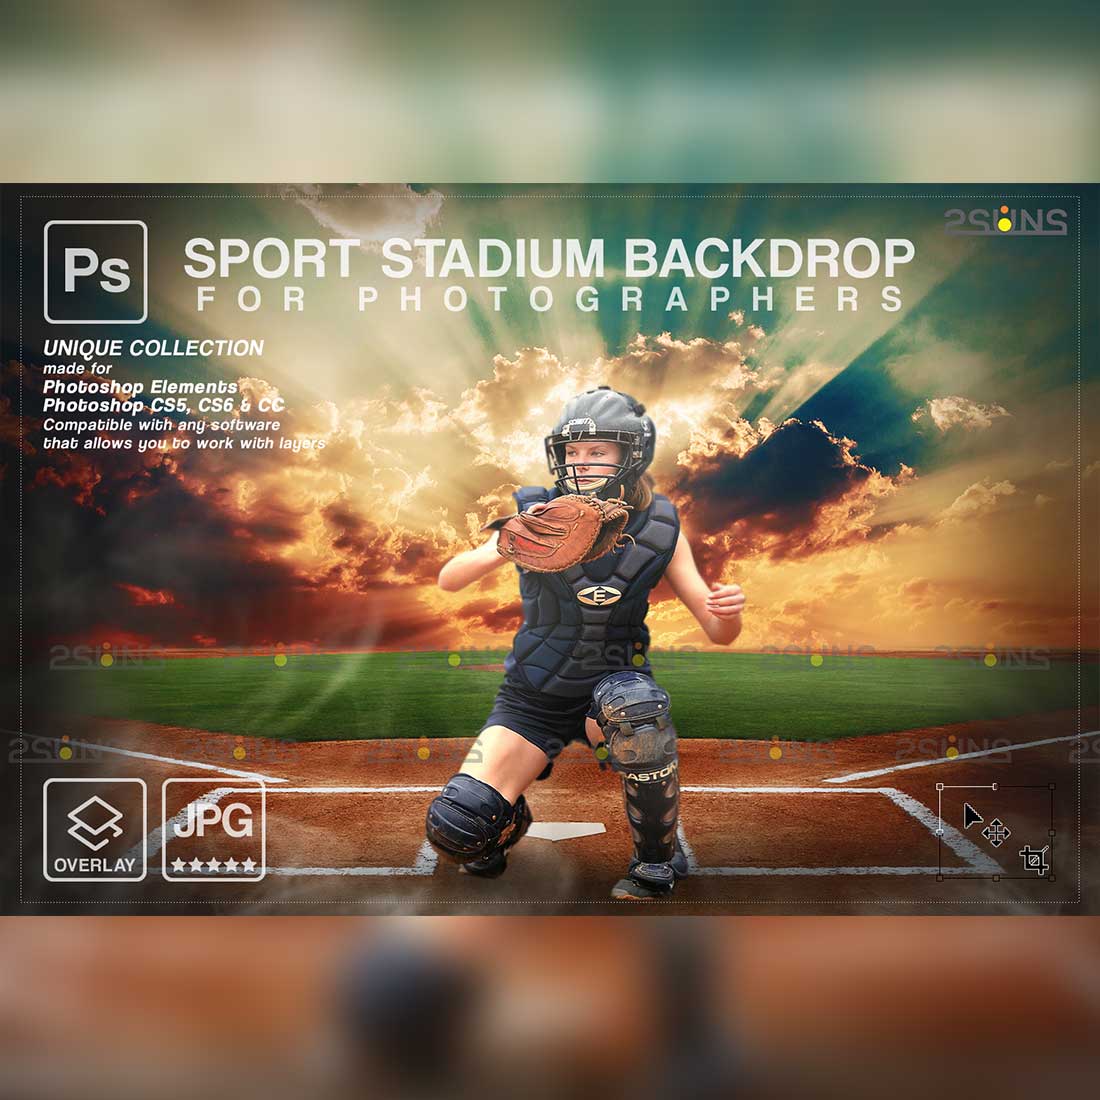 Baseball Sports Backdrop Digital Photo Background Cover Image.